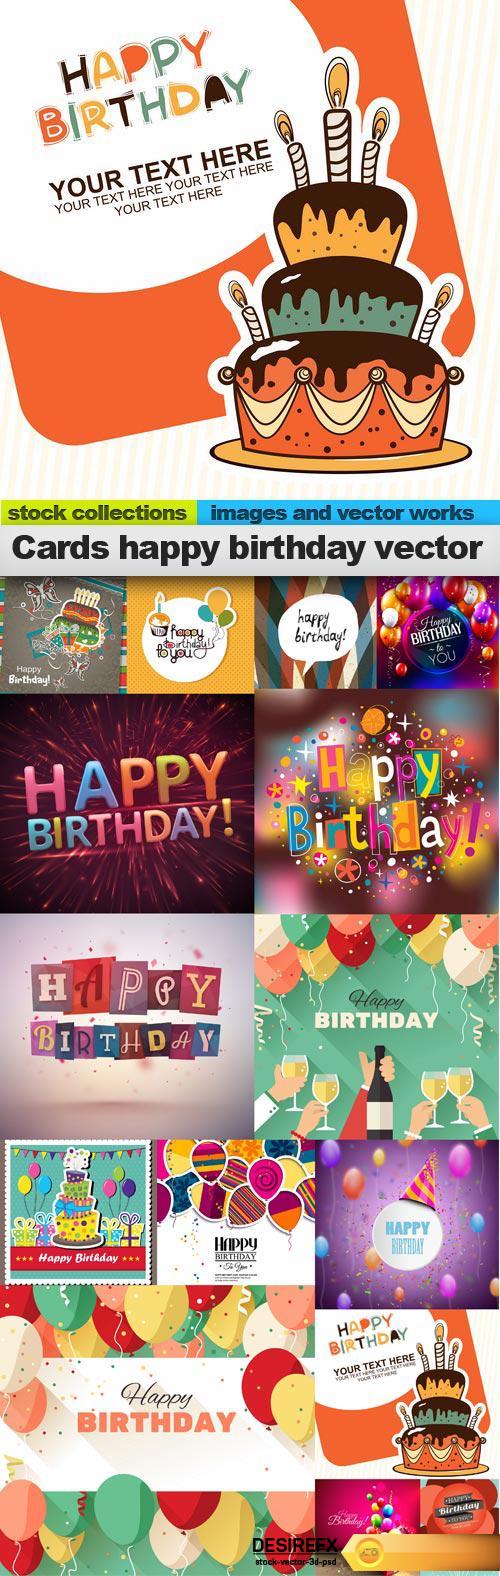 Cards happy birthday vector,15 x EPS